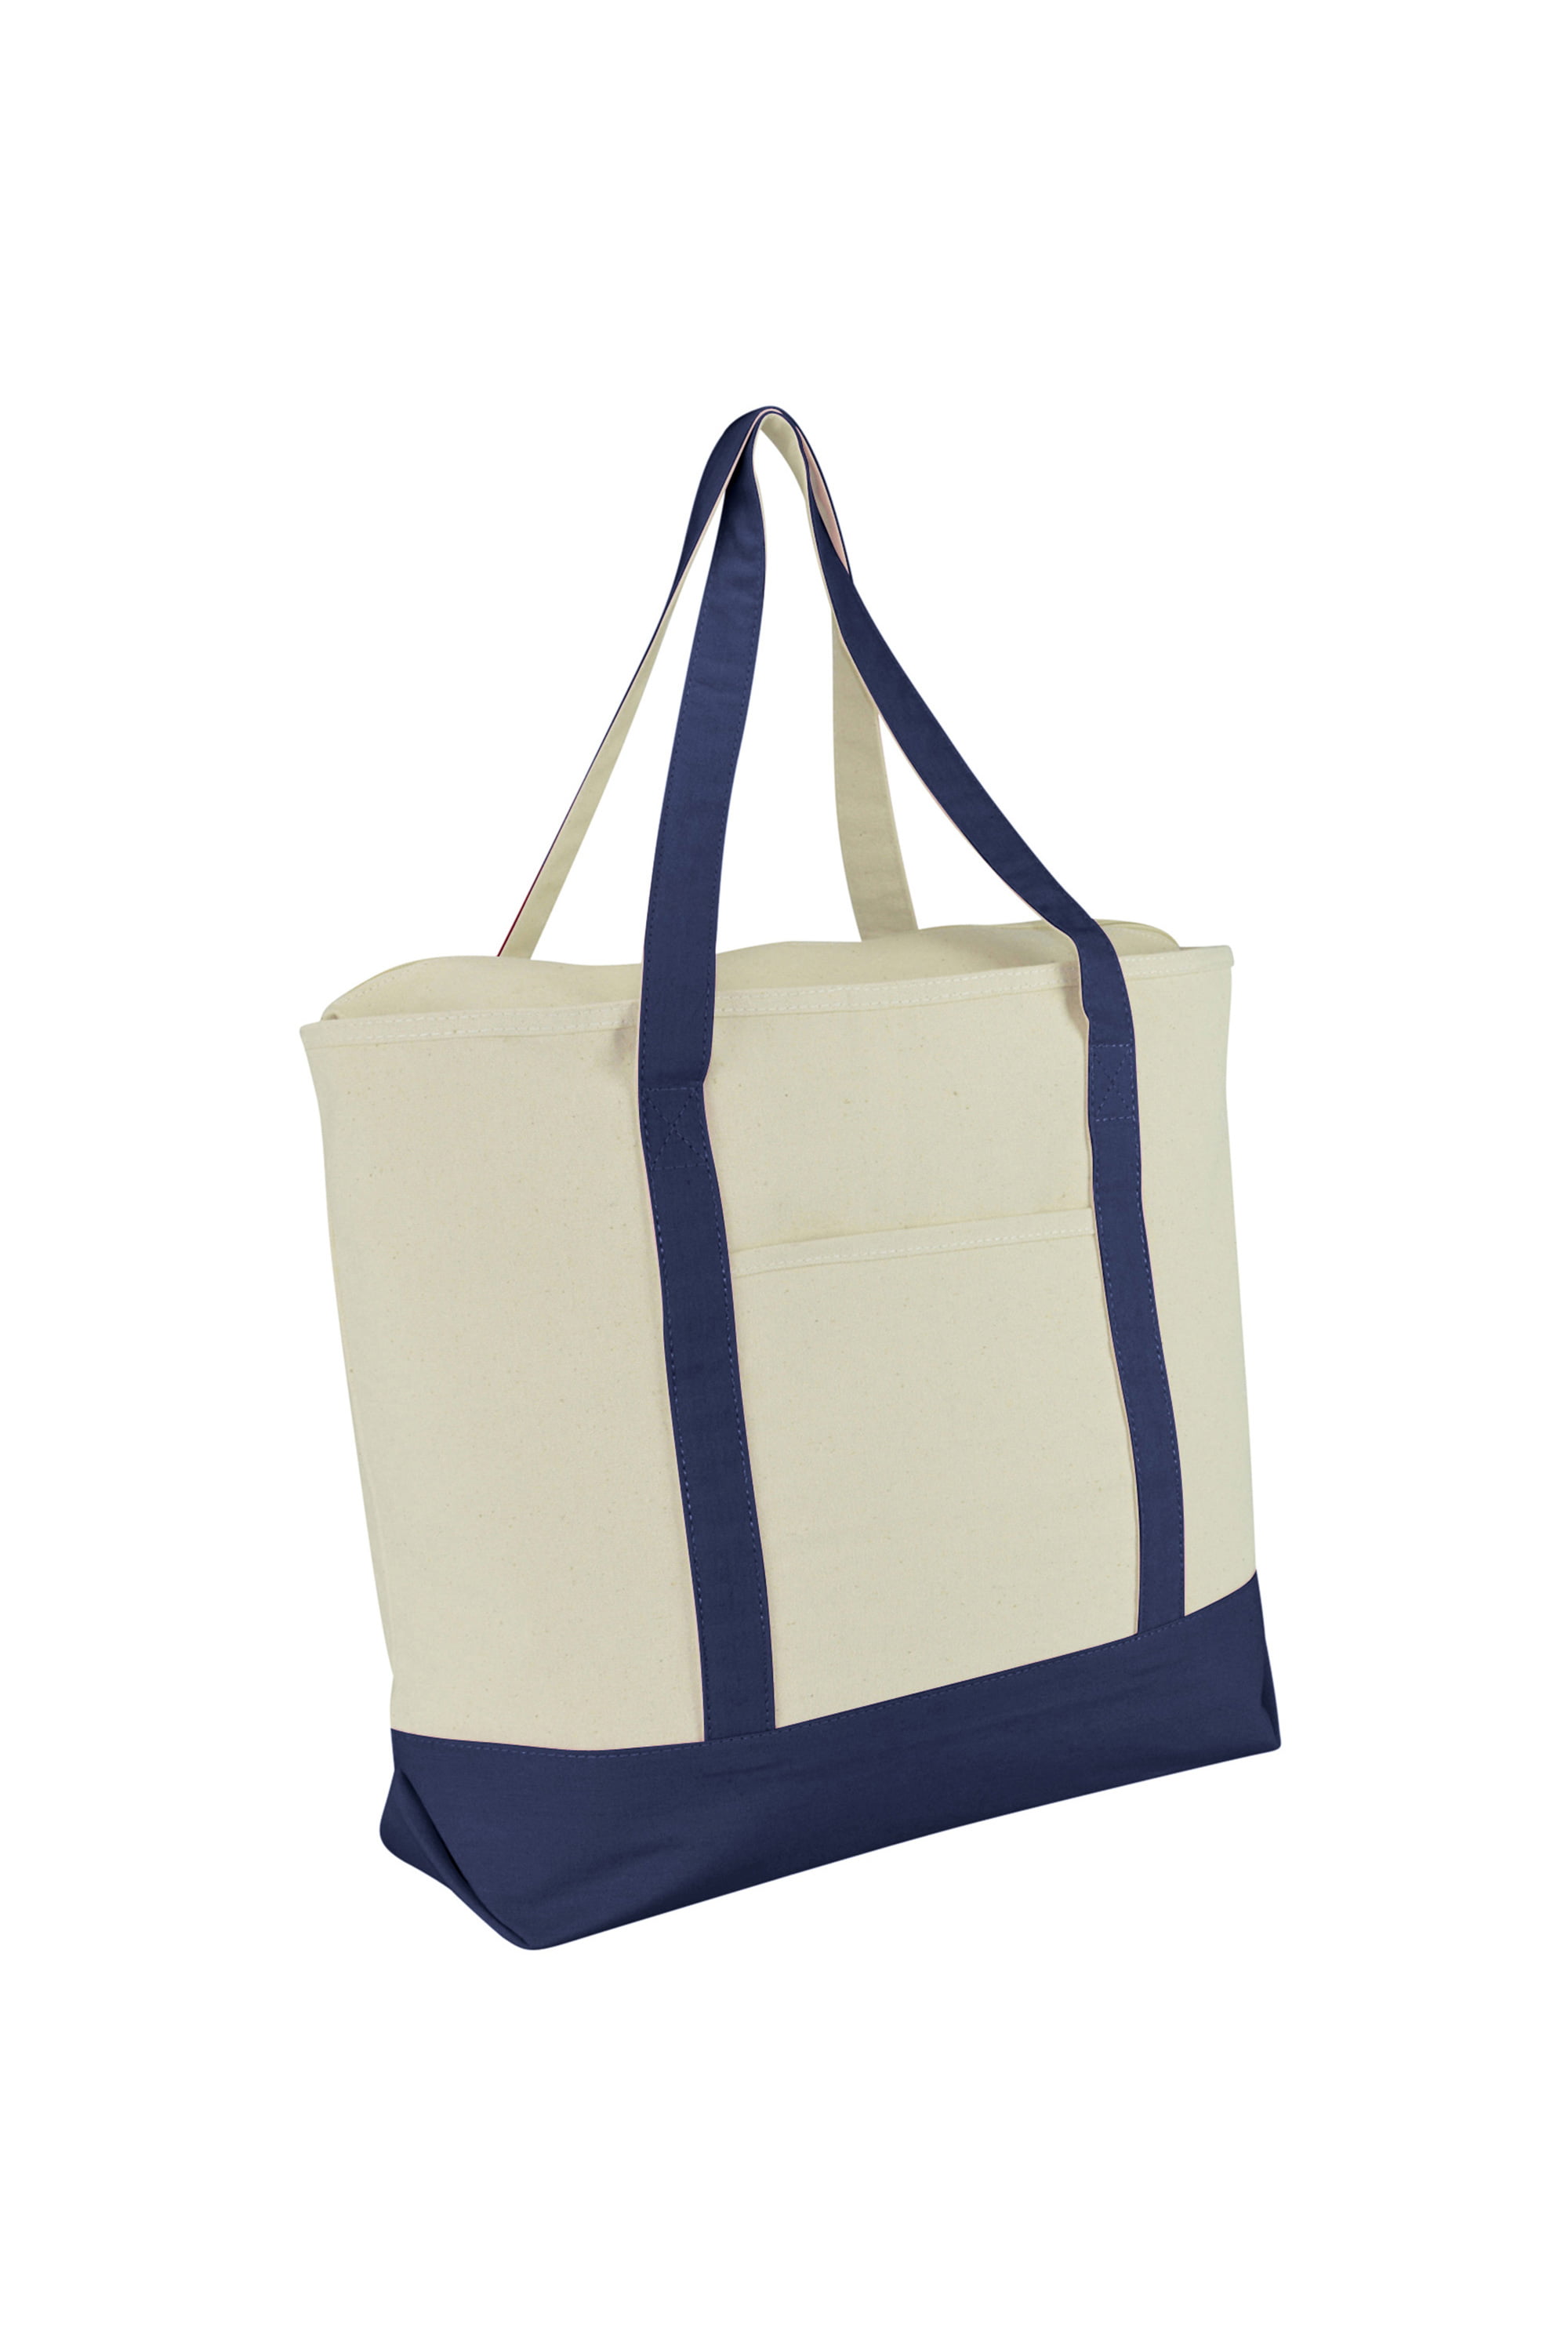 Canvas Shopping Tote Bag 4 Wheels Move The Body 2 Soul Billiards Beach Bags for Women Mountains Mug 